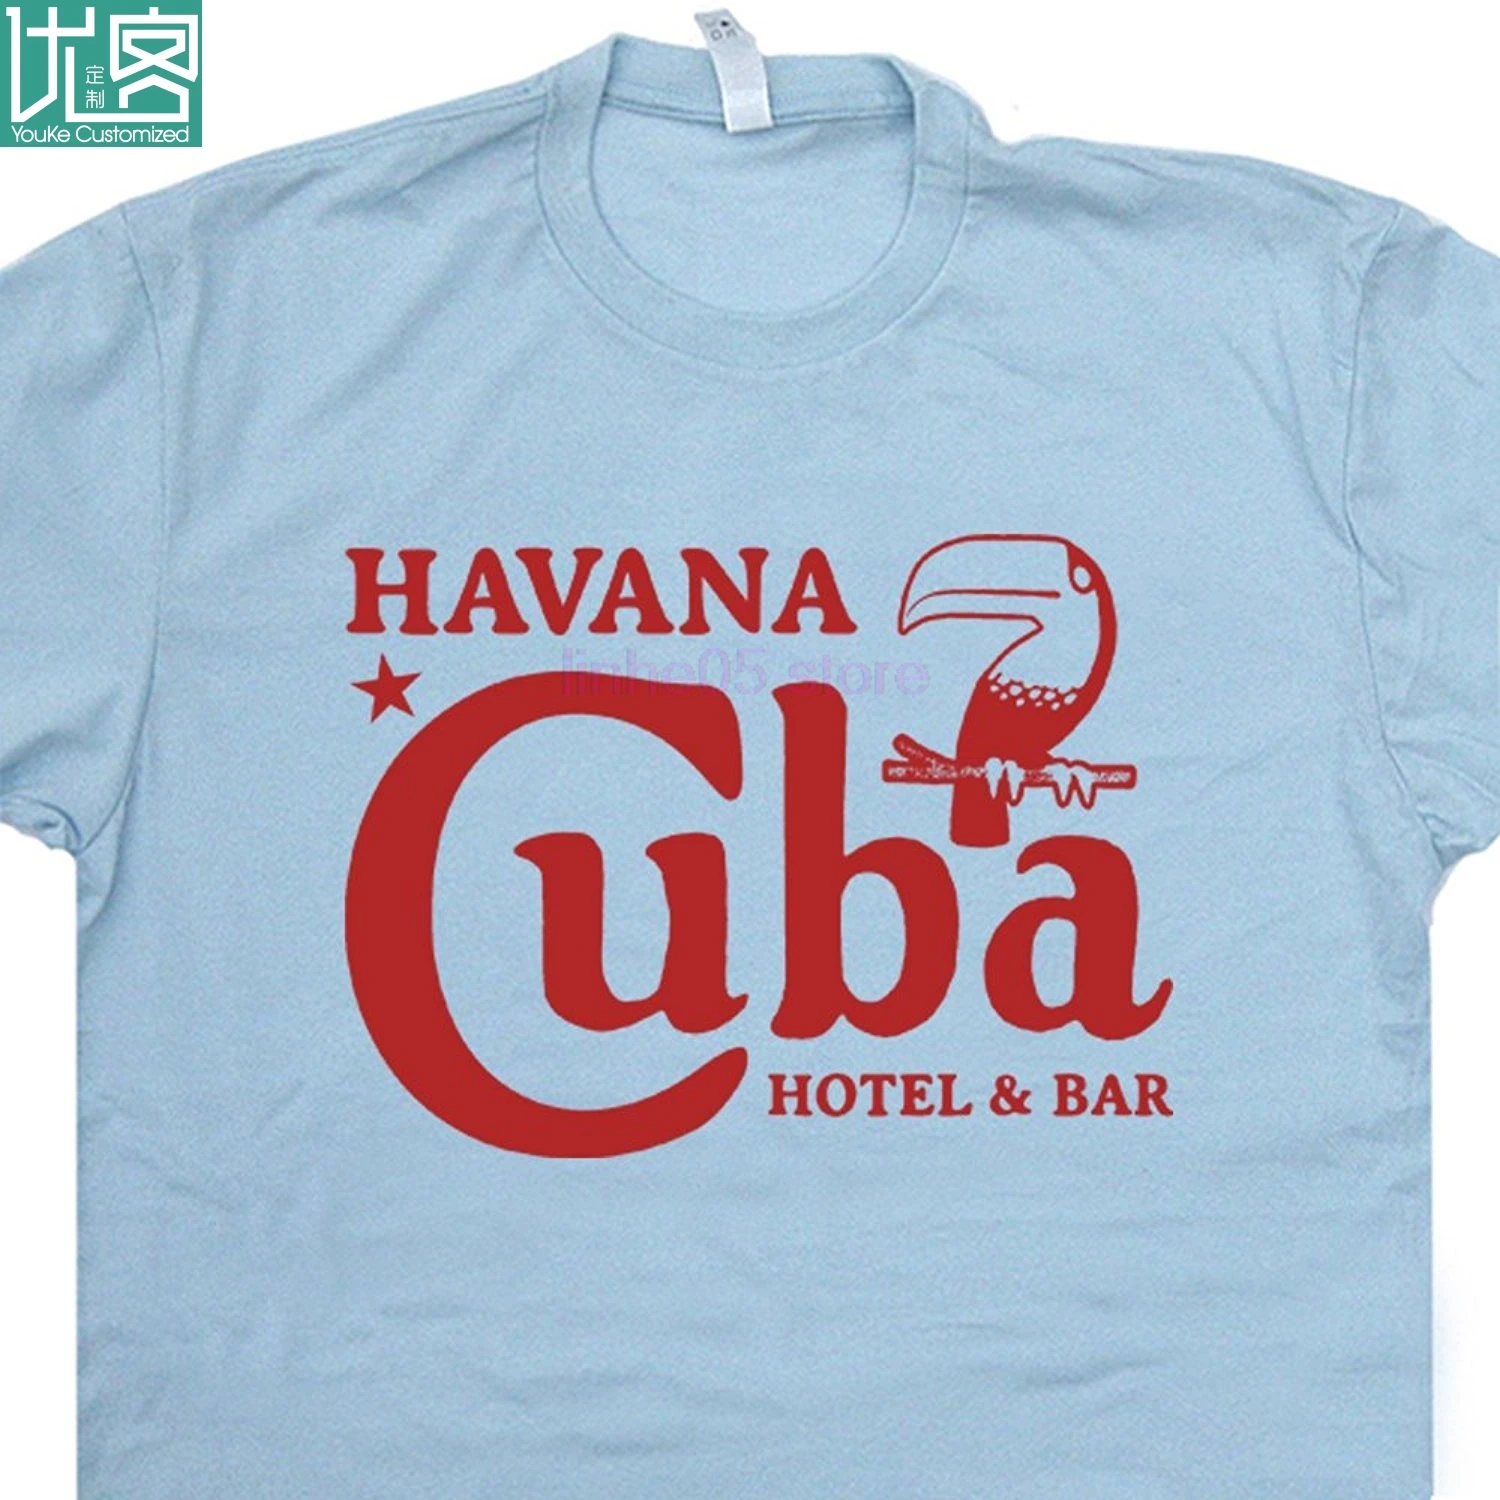 

Cuba T Shirt Visit Cuba Che Guevara Tee Vintage Retro Cuban Scarface Wo Tees